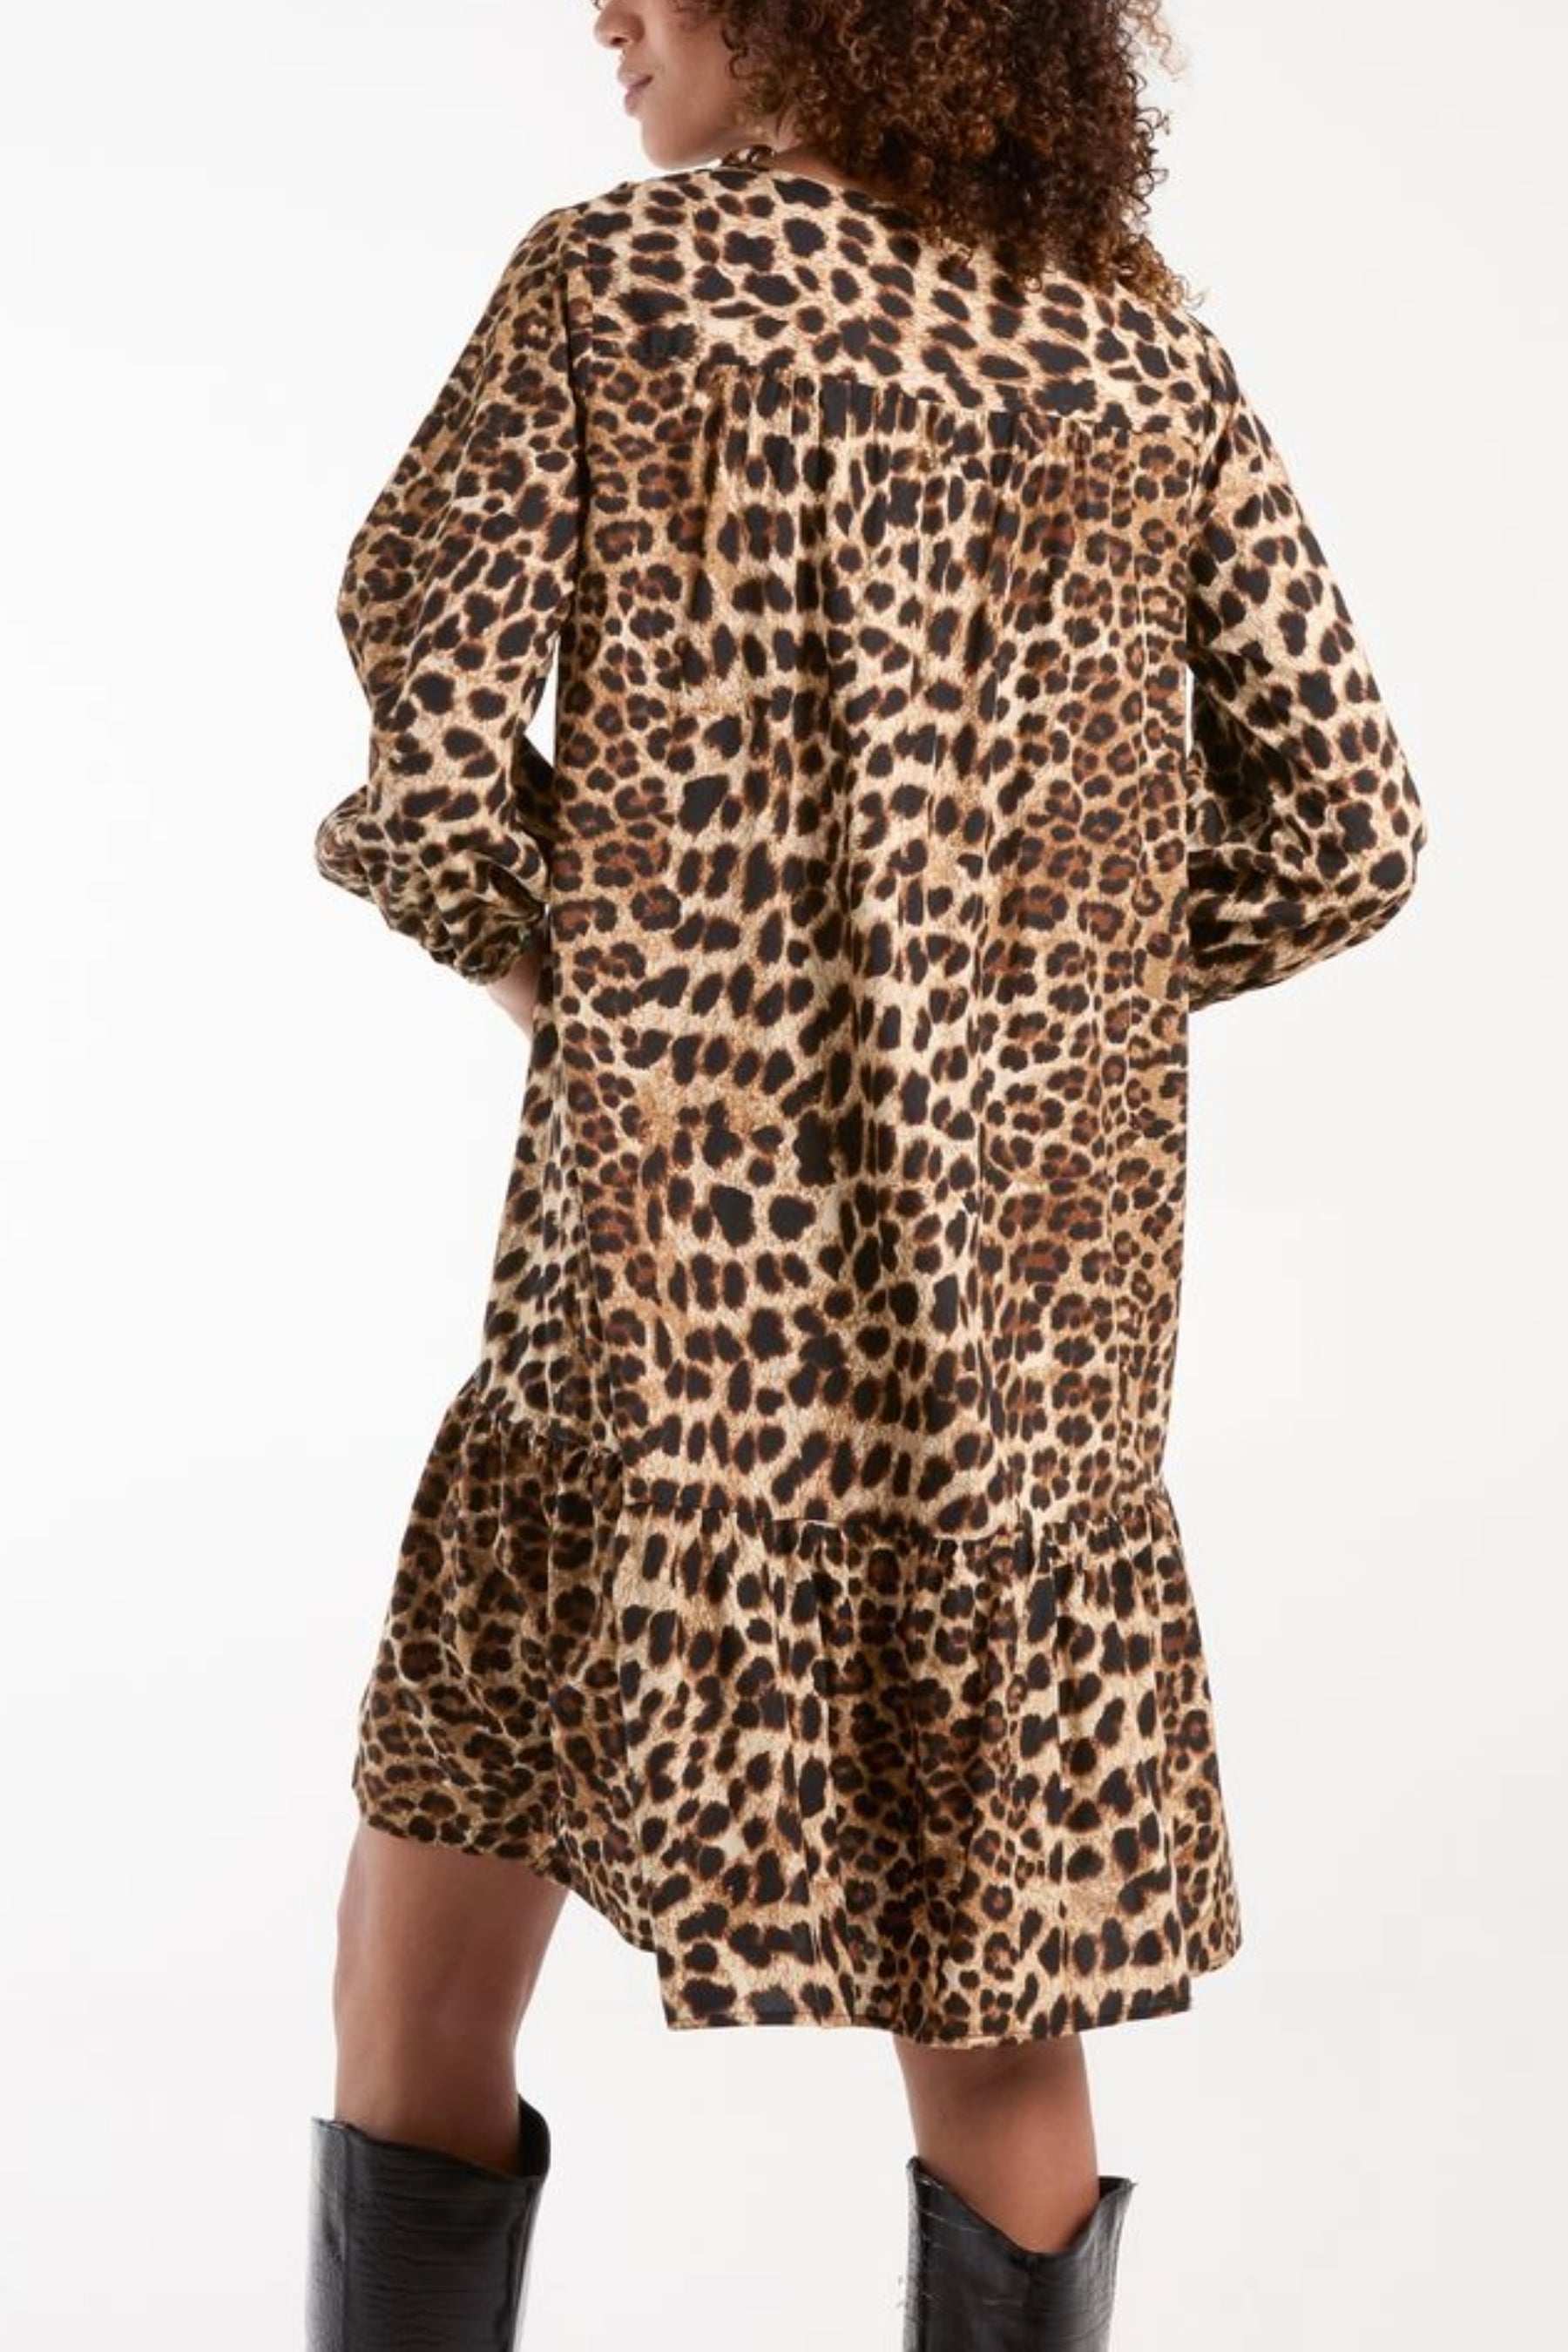 Leopard Print Front Tie Neck Smock Dress